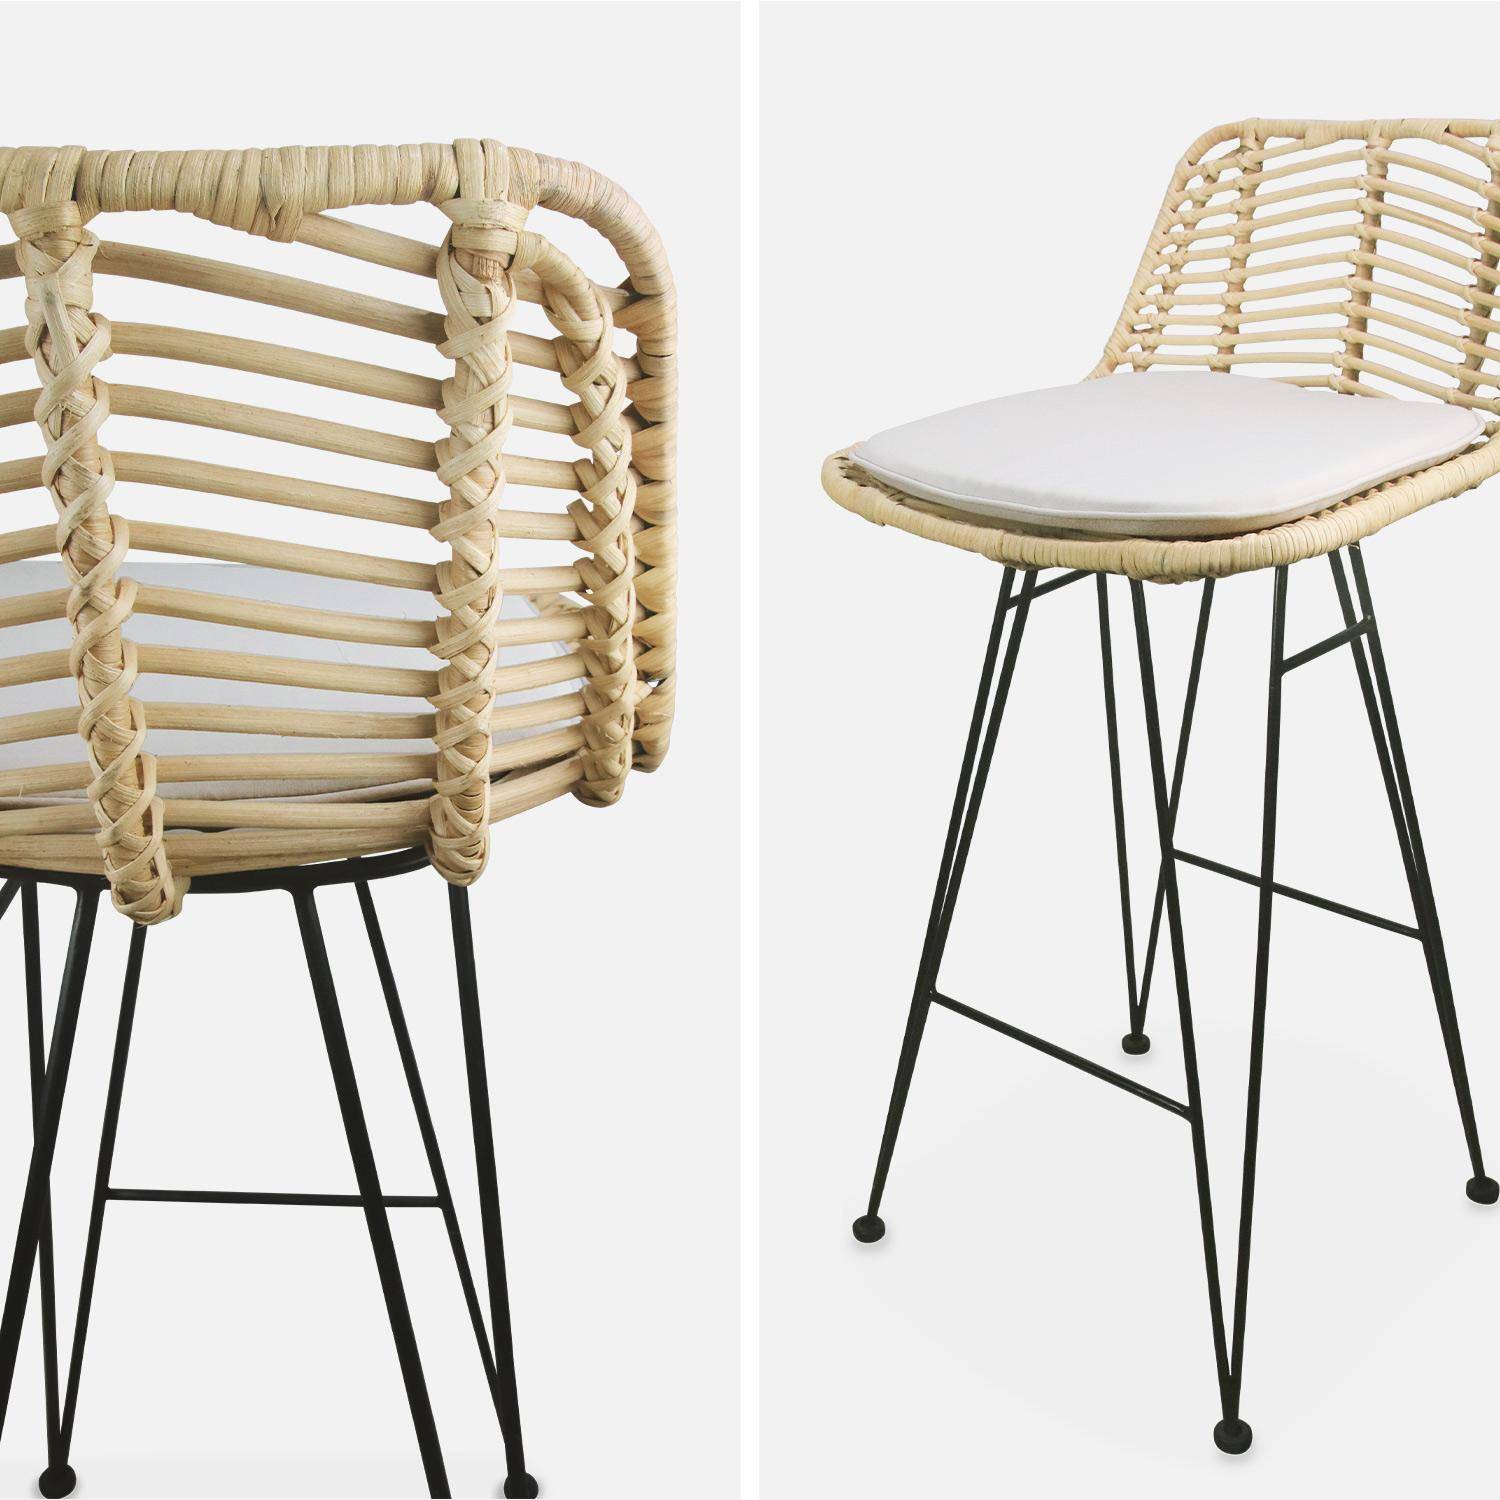 Pair of rattan bar stools with cushions, seat height 67cm - Cahya - Natural rattan, Beige cushions,sweeek,Photo6